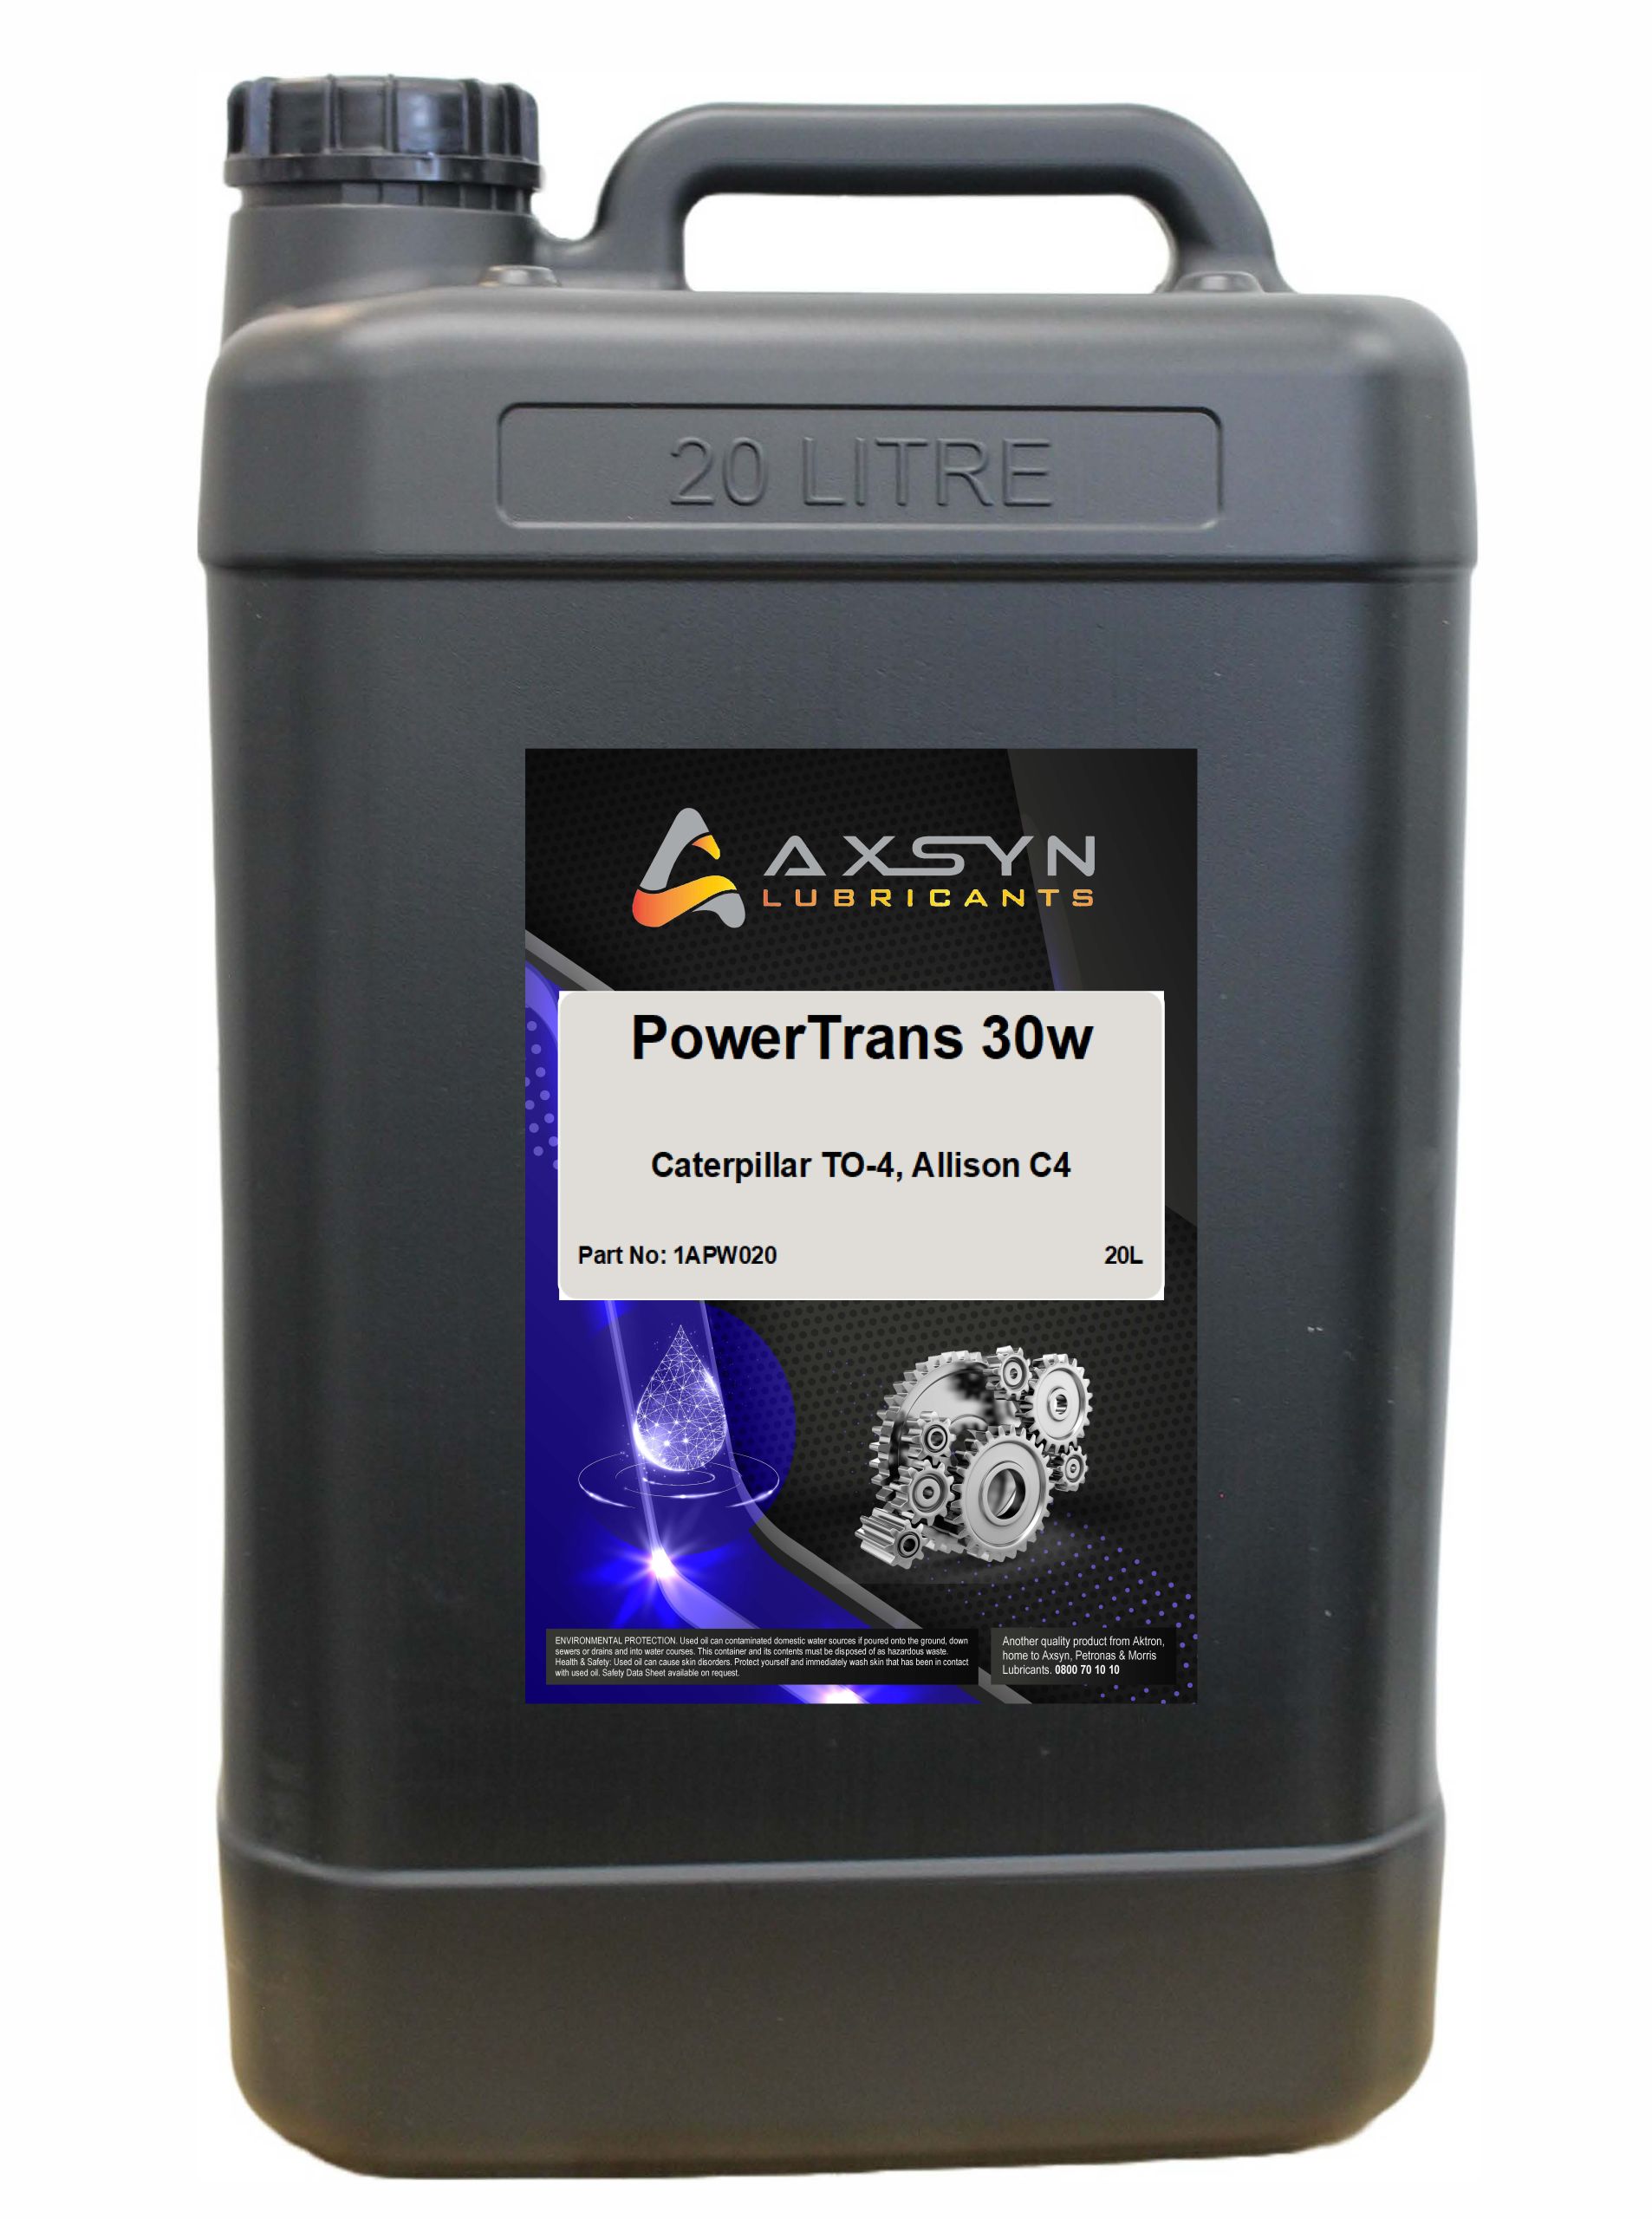 Axsyn PowerTrans 30w